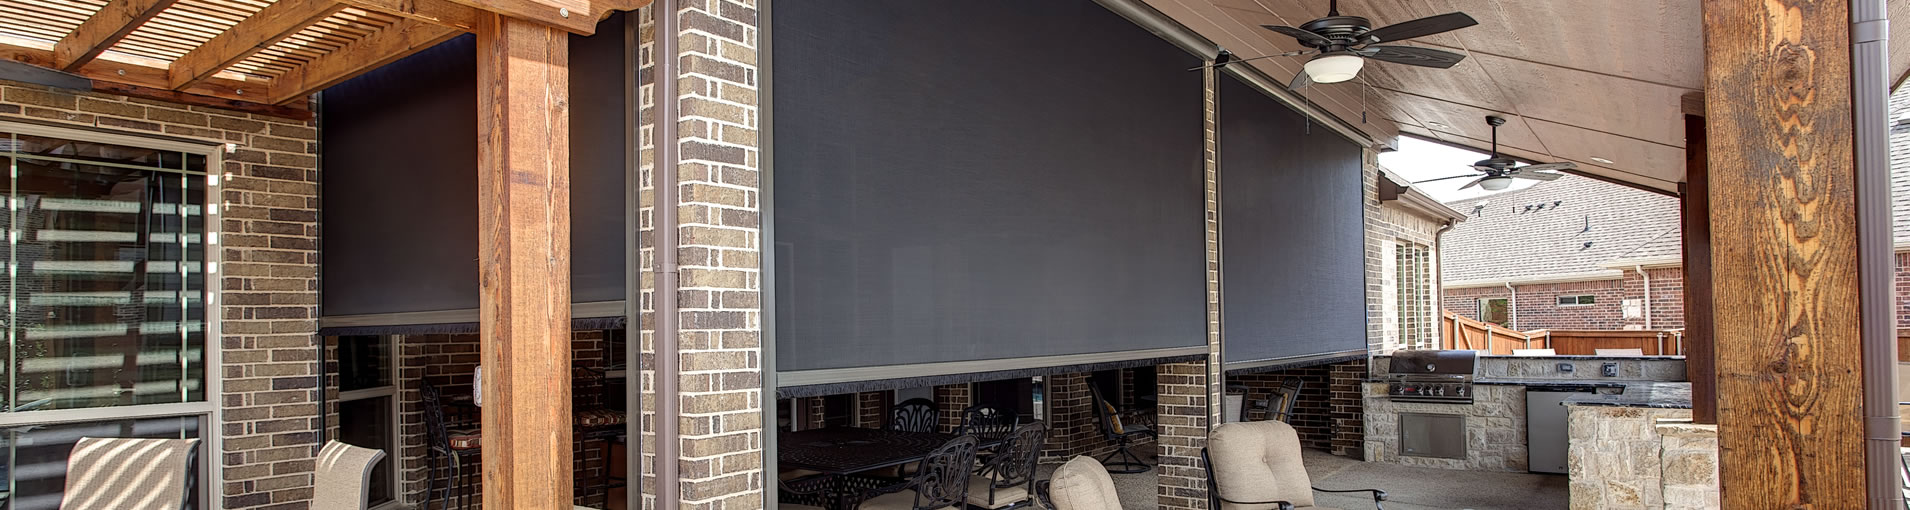 Miami Motorized retractable screens for outdoor porches, patios and decks